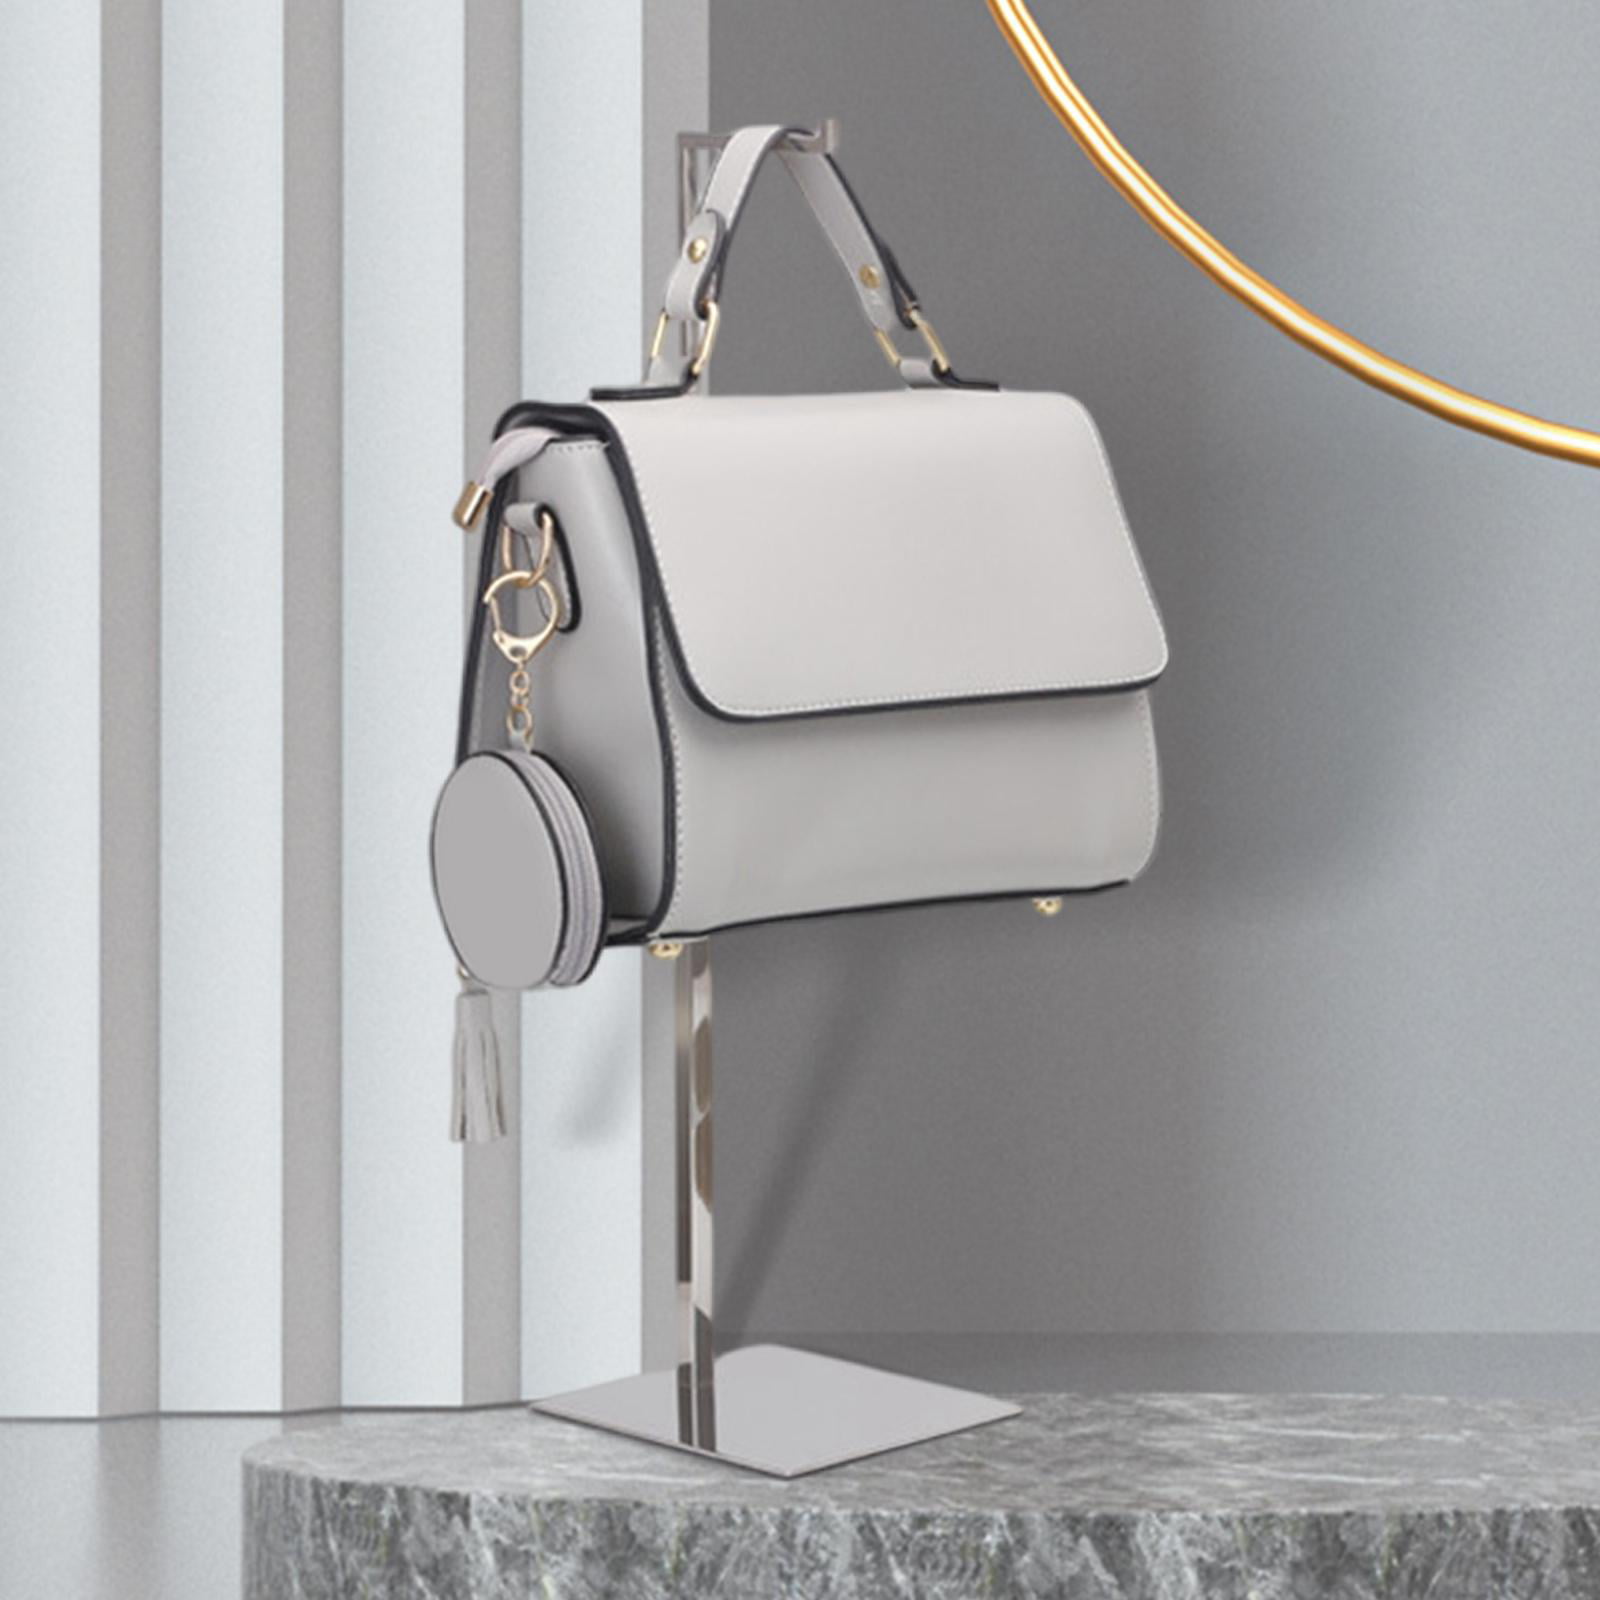 Smilepp Handbag Display Stand Adjustable Height Metal Retail